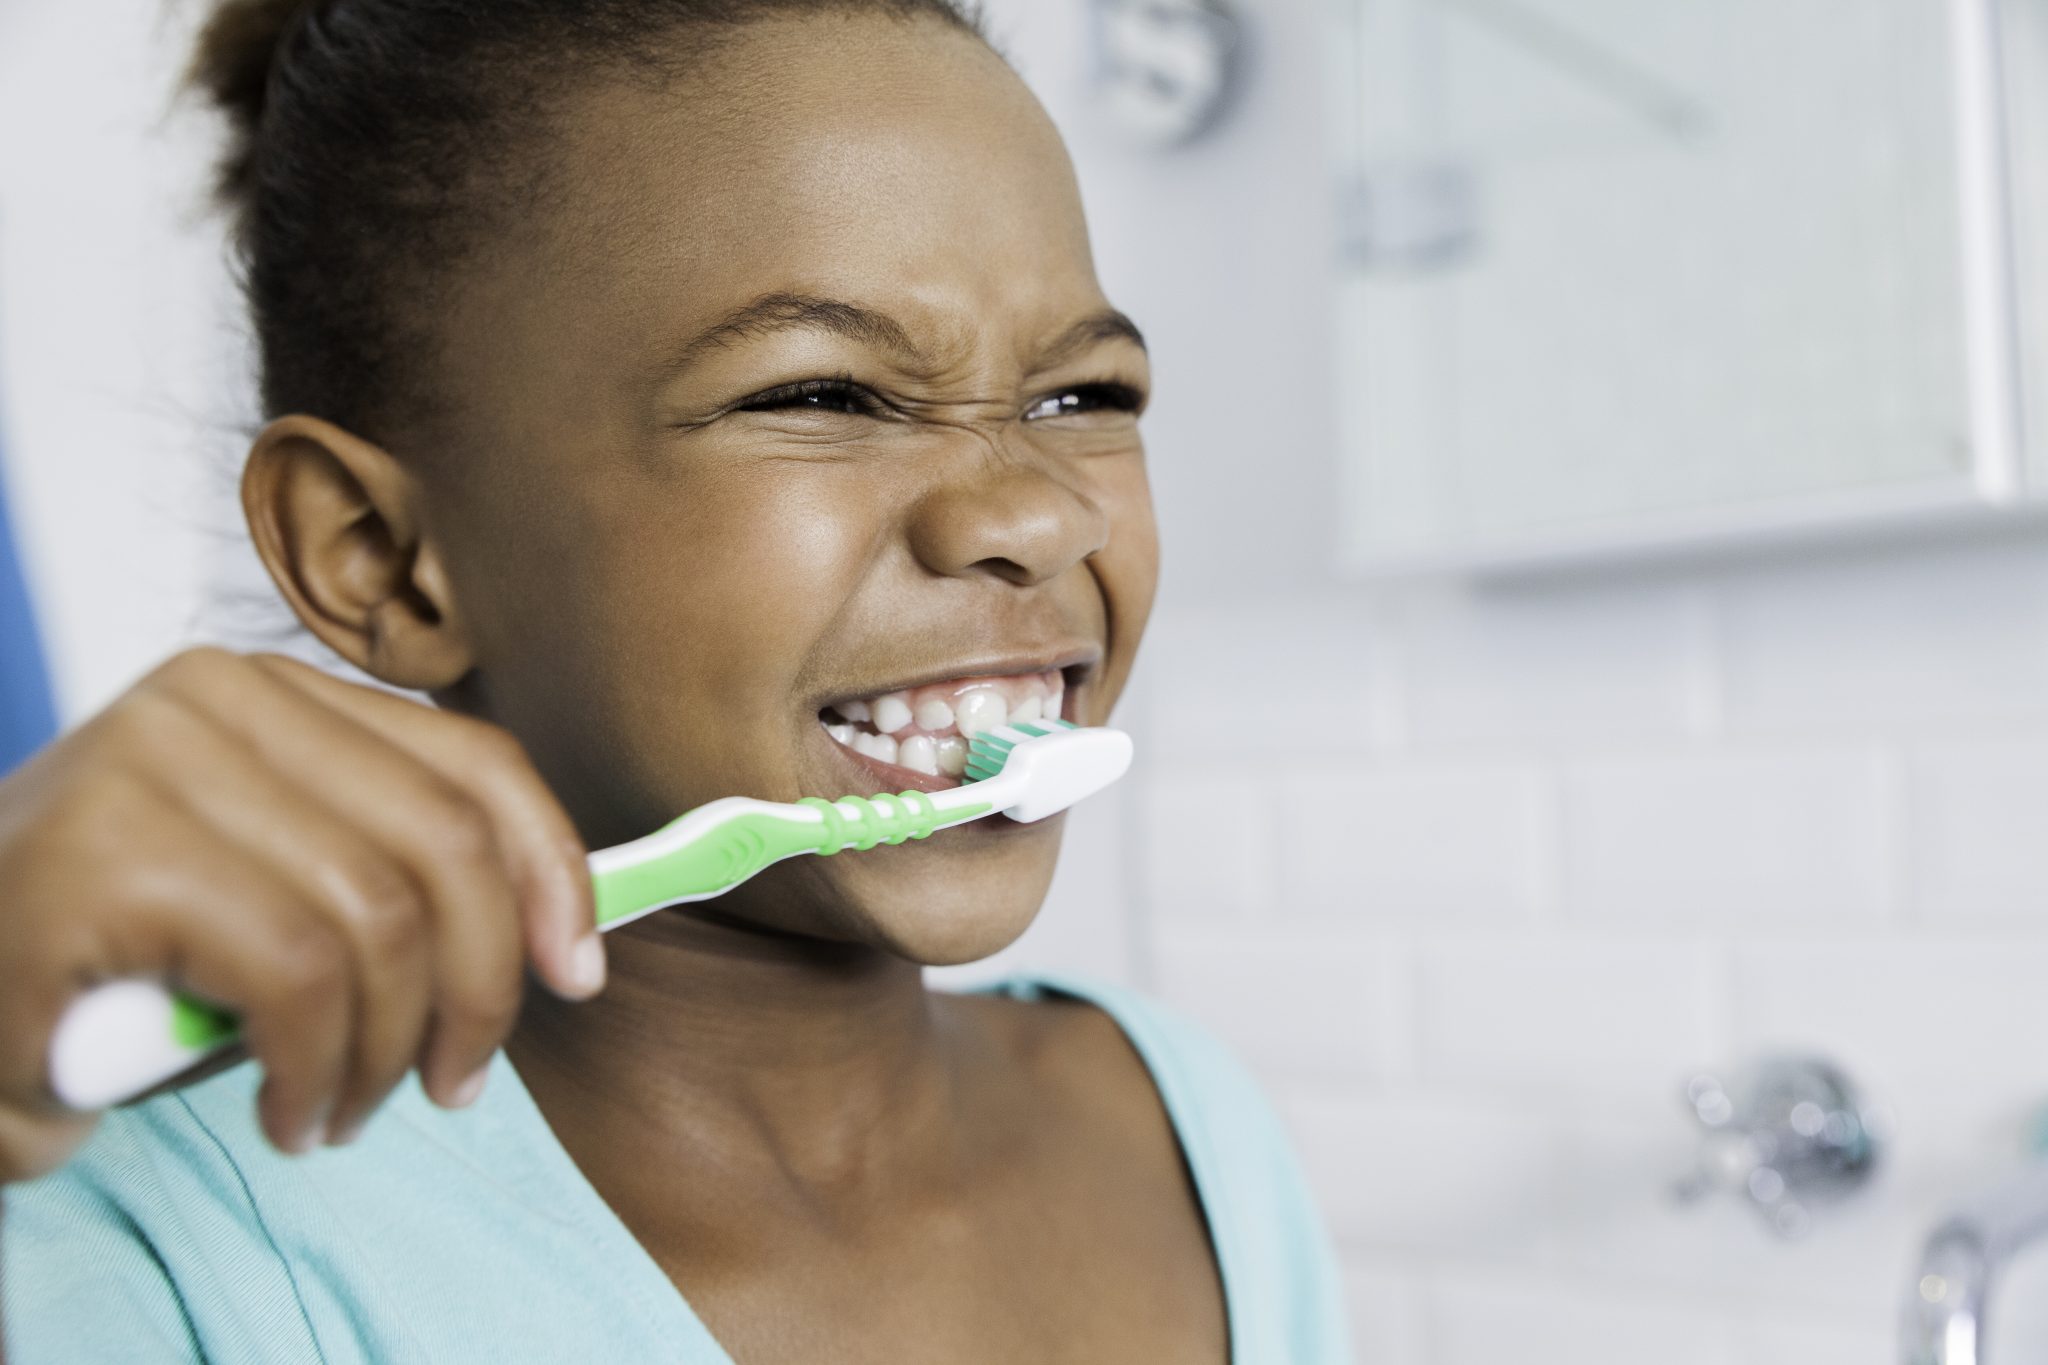 Beautiful young girl brushing her teeth. 815356714 5616x3744 scaled 1